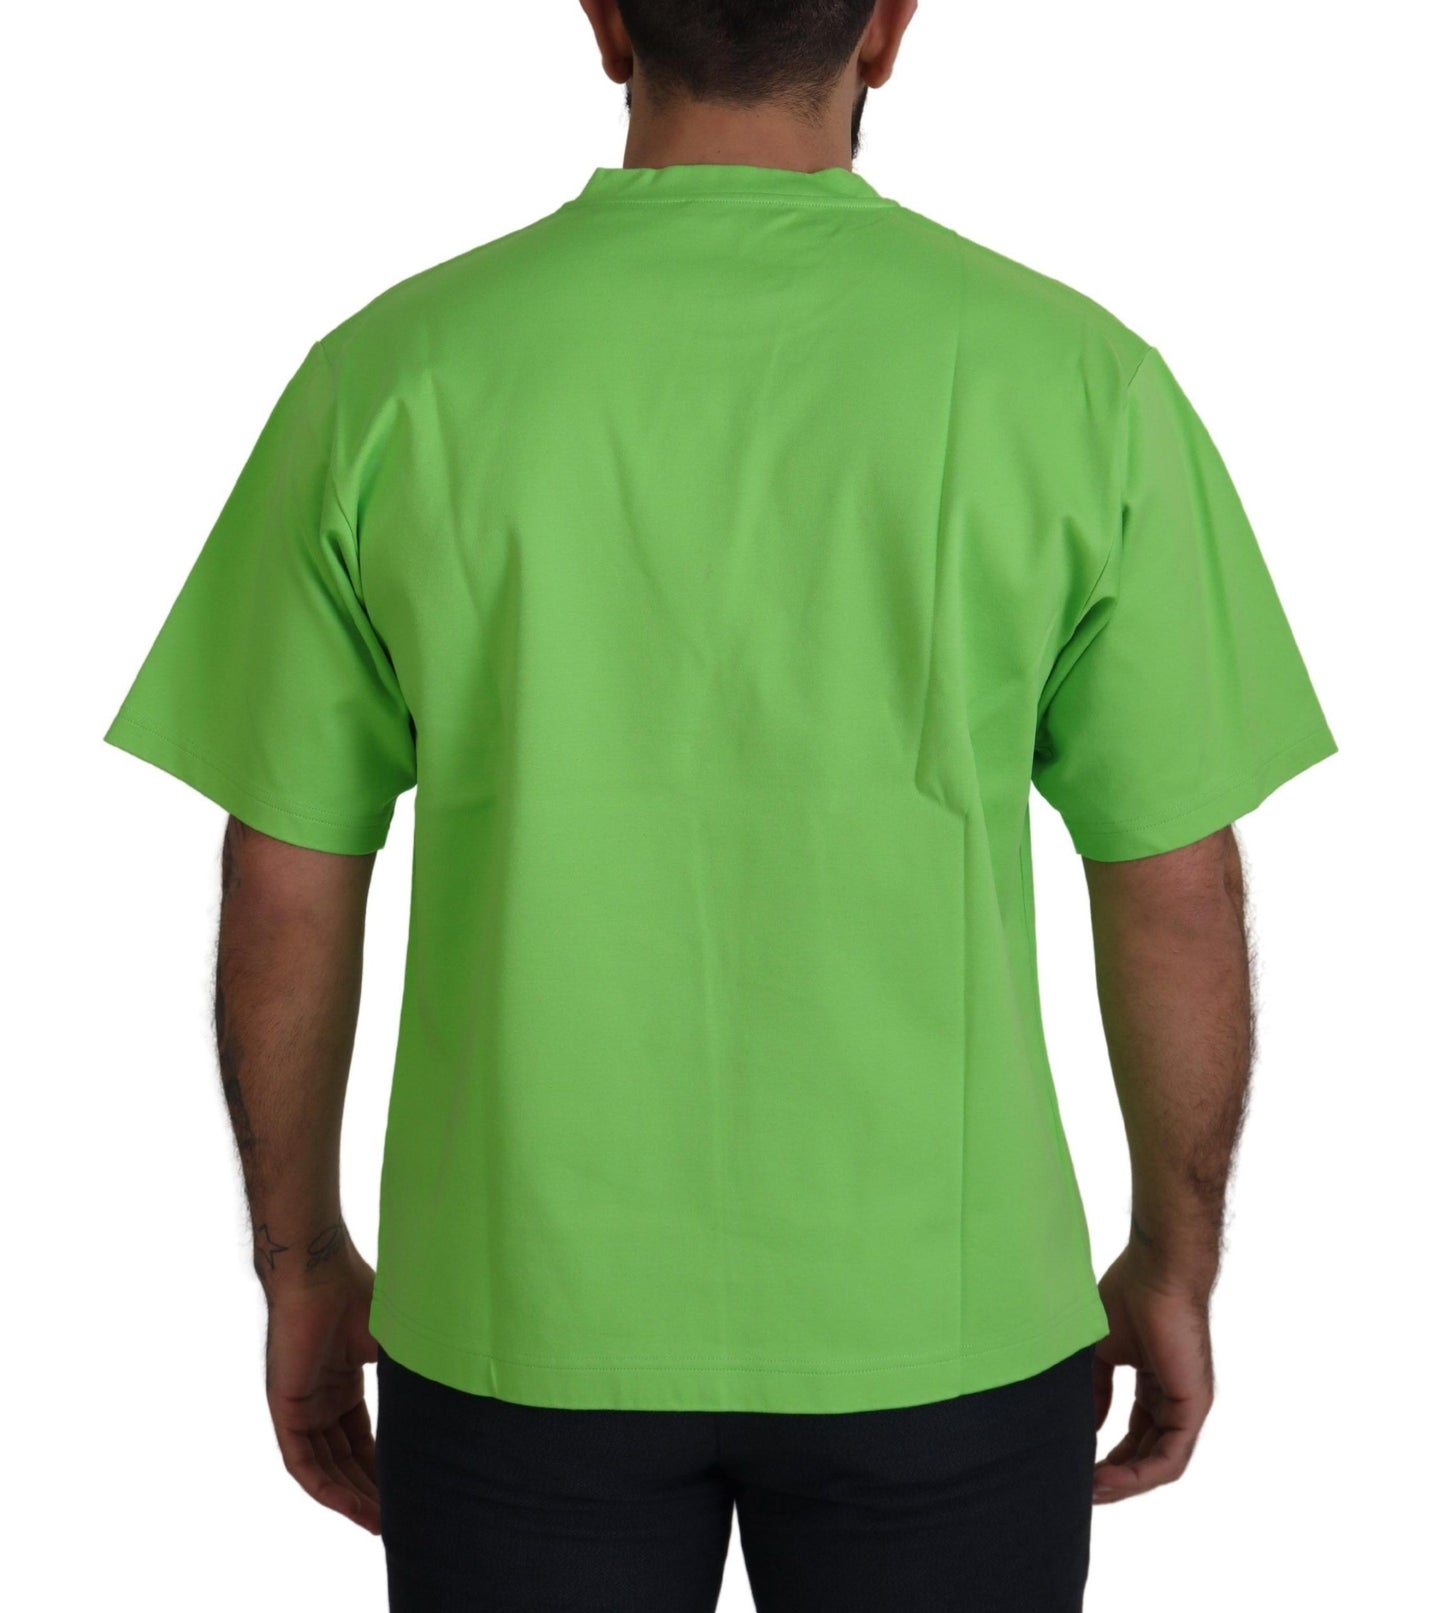 Dolce & Gabbana Green Cotton DG CHANNEL Top T-shirt